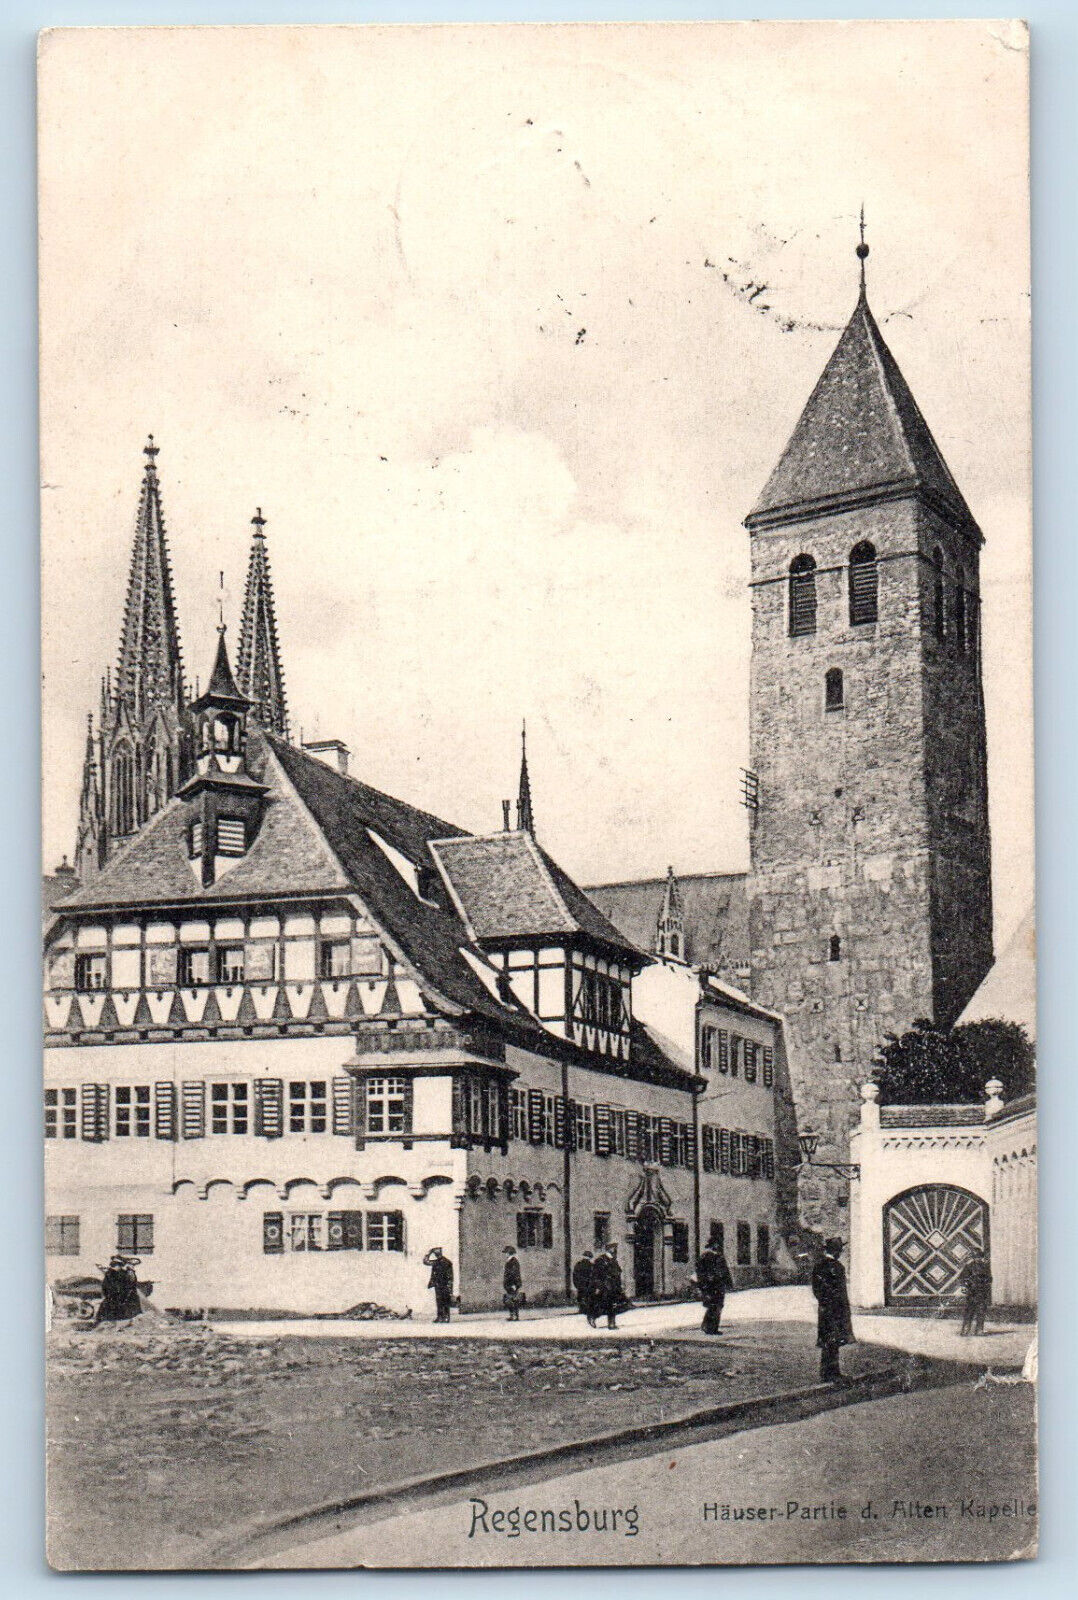 Regensburg Bavaria Germany Postcard View of Big Building 1906 Posted Antique